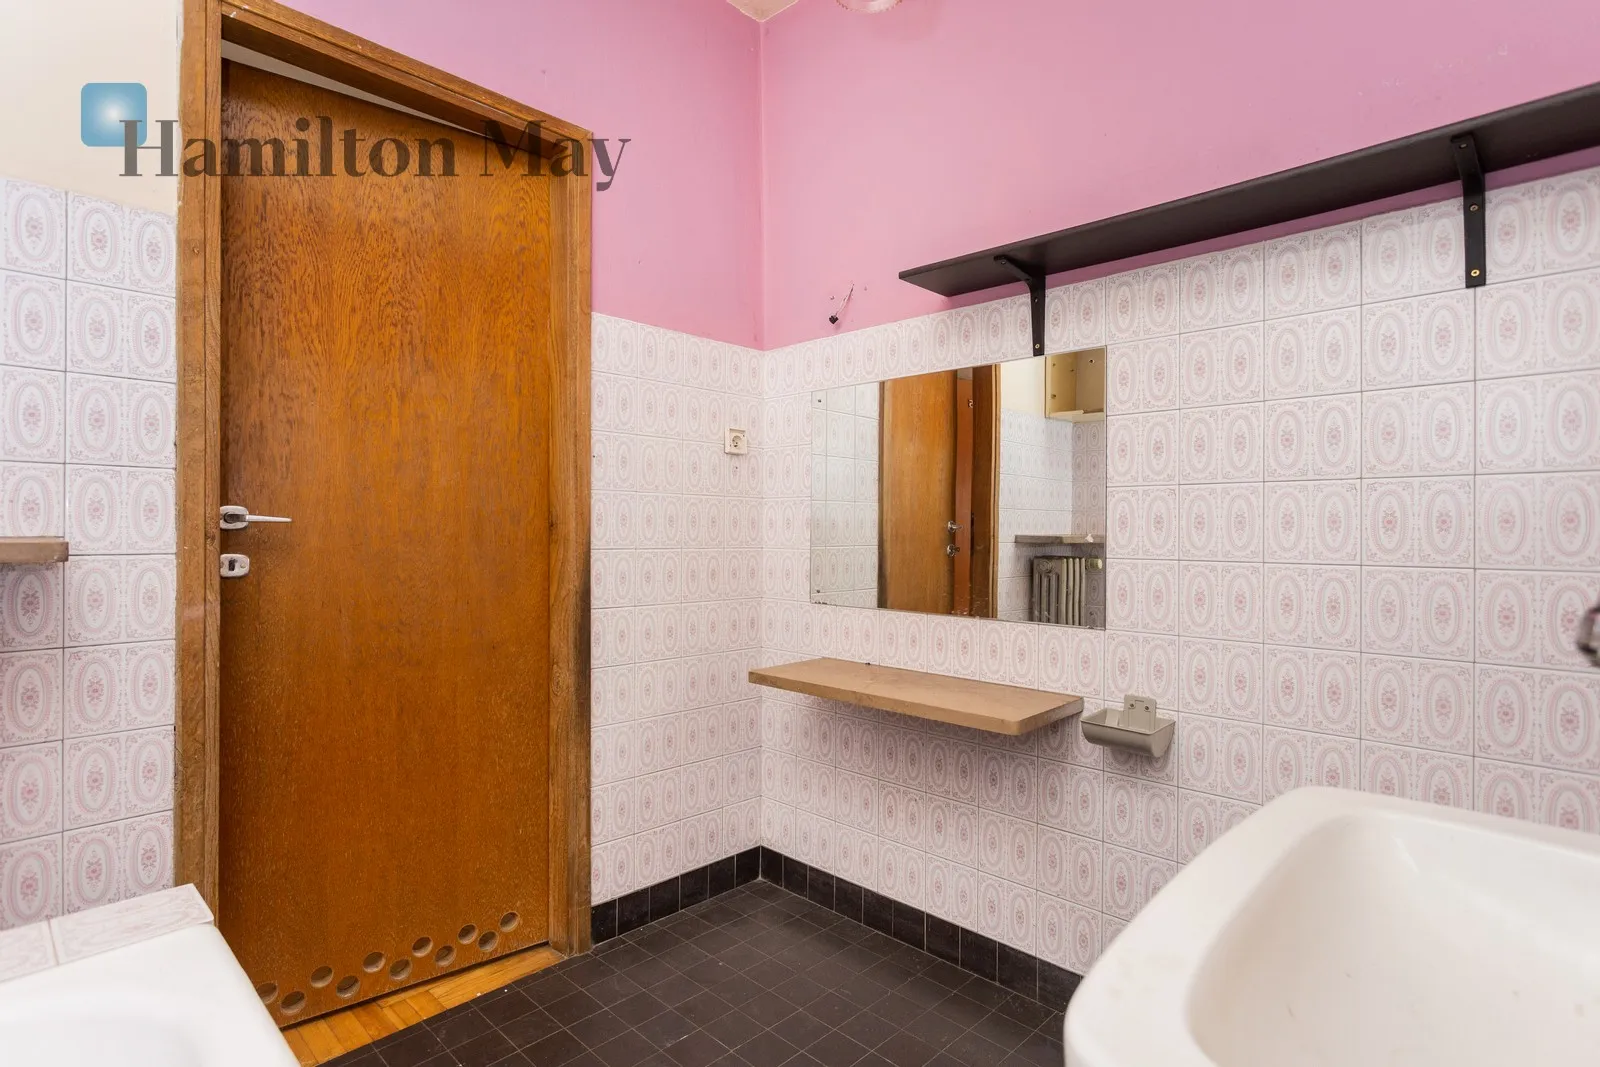 Bedrooms: 5 Bathrooms: 3 Plot size: 300m2